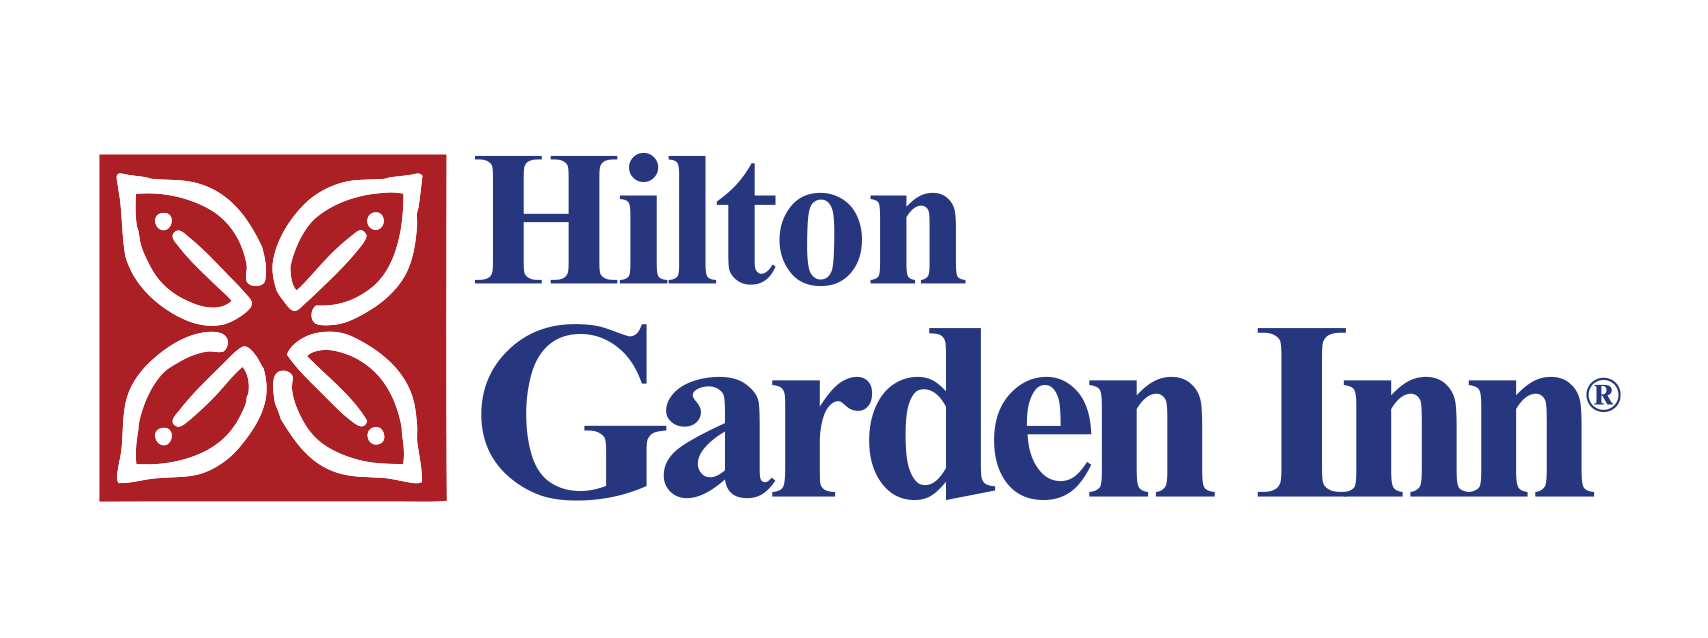 hilton-garden-inn-logo-new